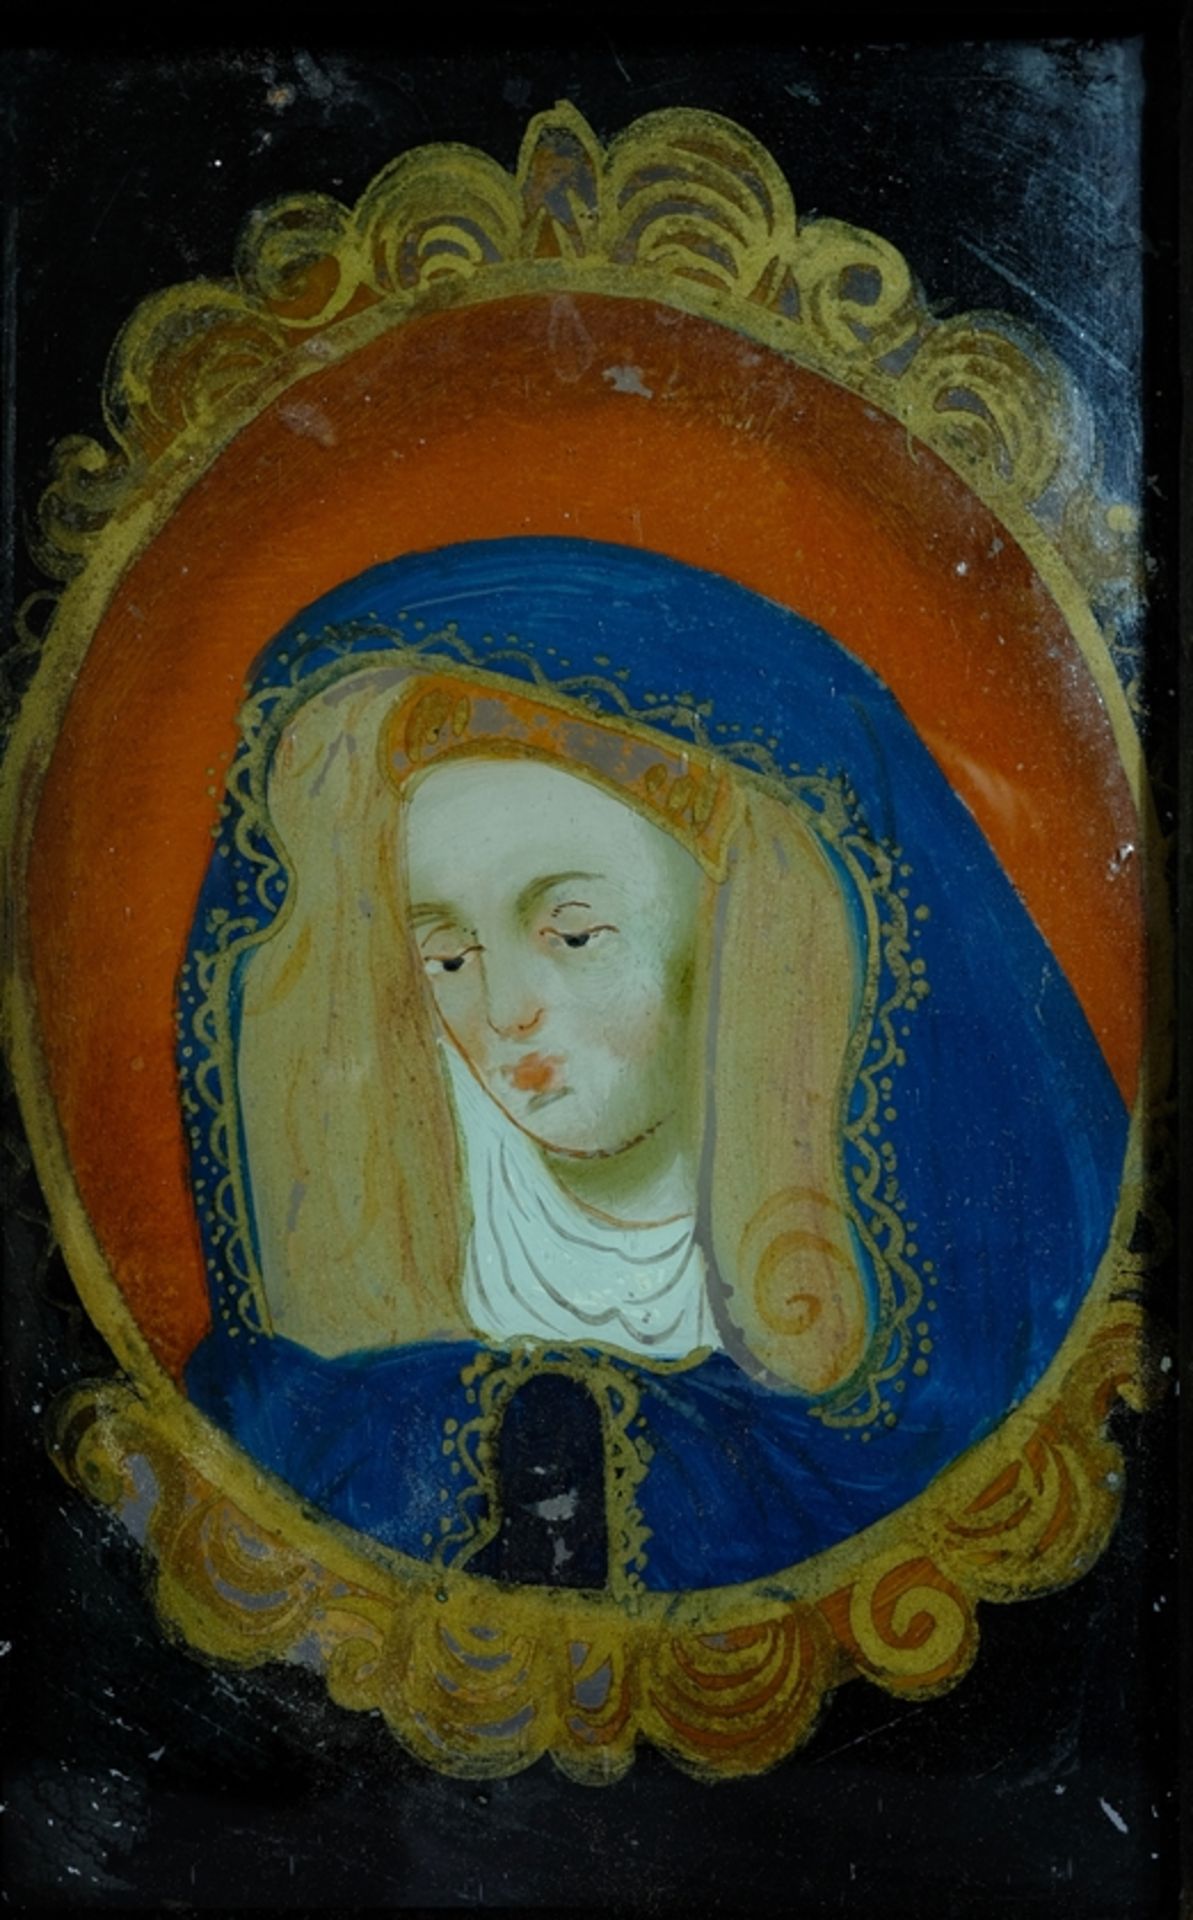 Marienportrait, Hinterglasmalerei, Öl auf Glas um 1700